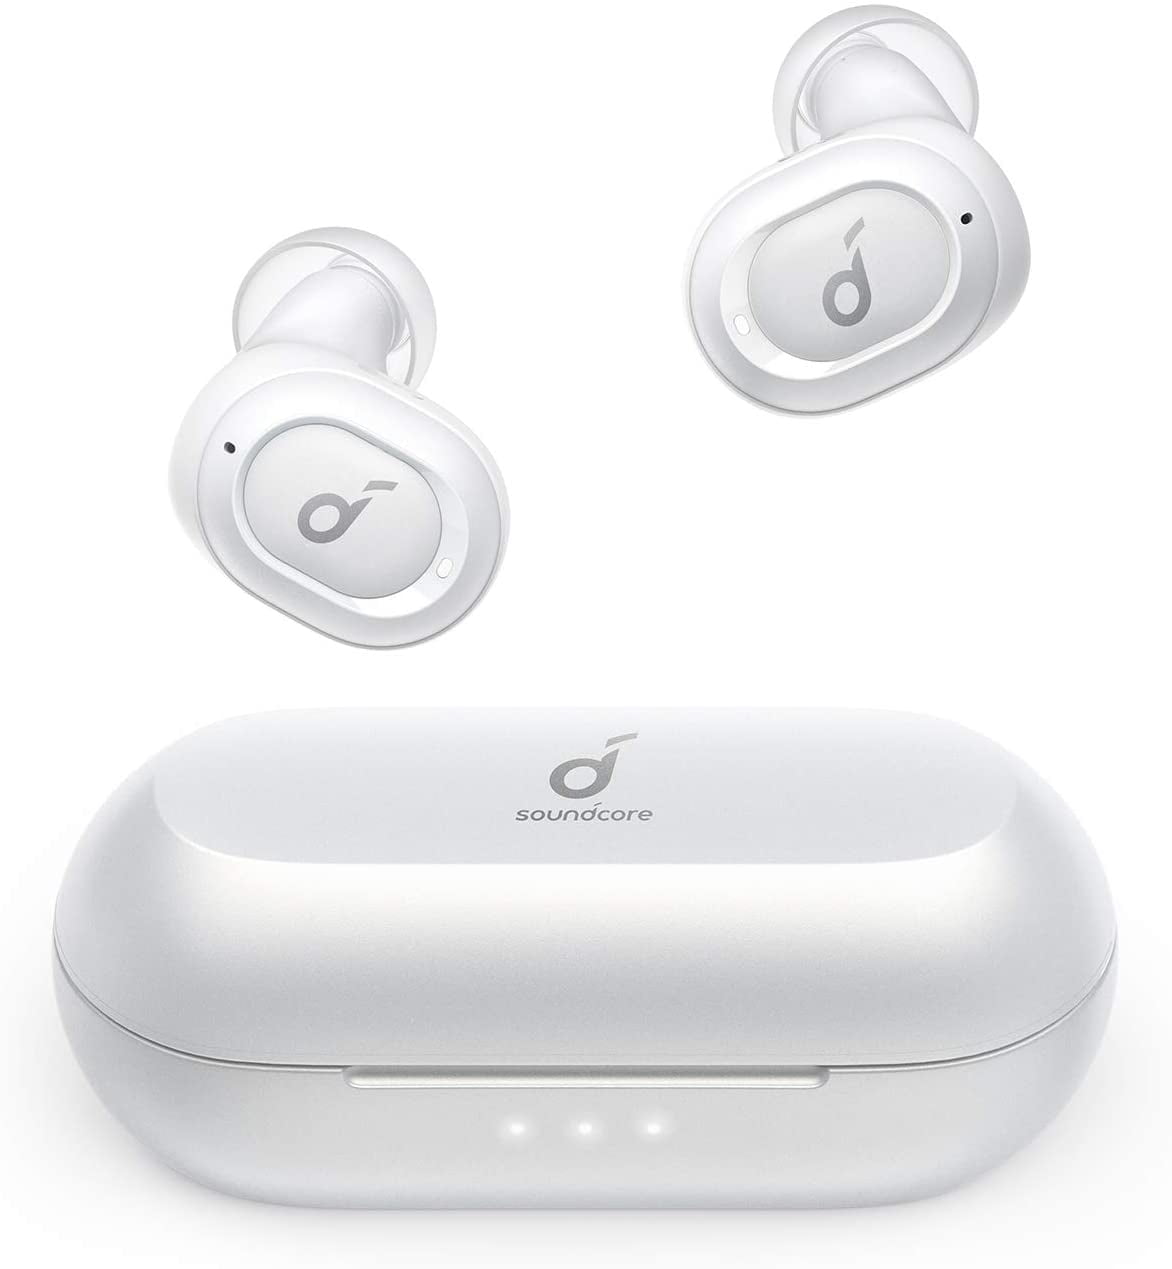 Upgraded,Anker Soundcore Liberty Neo True Wireless Earbuds IPX7 Waterproof Stereo Headphones [White]